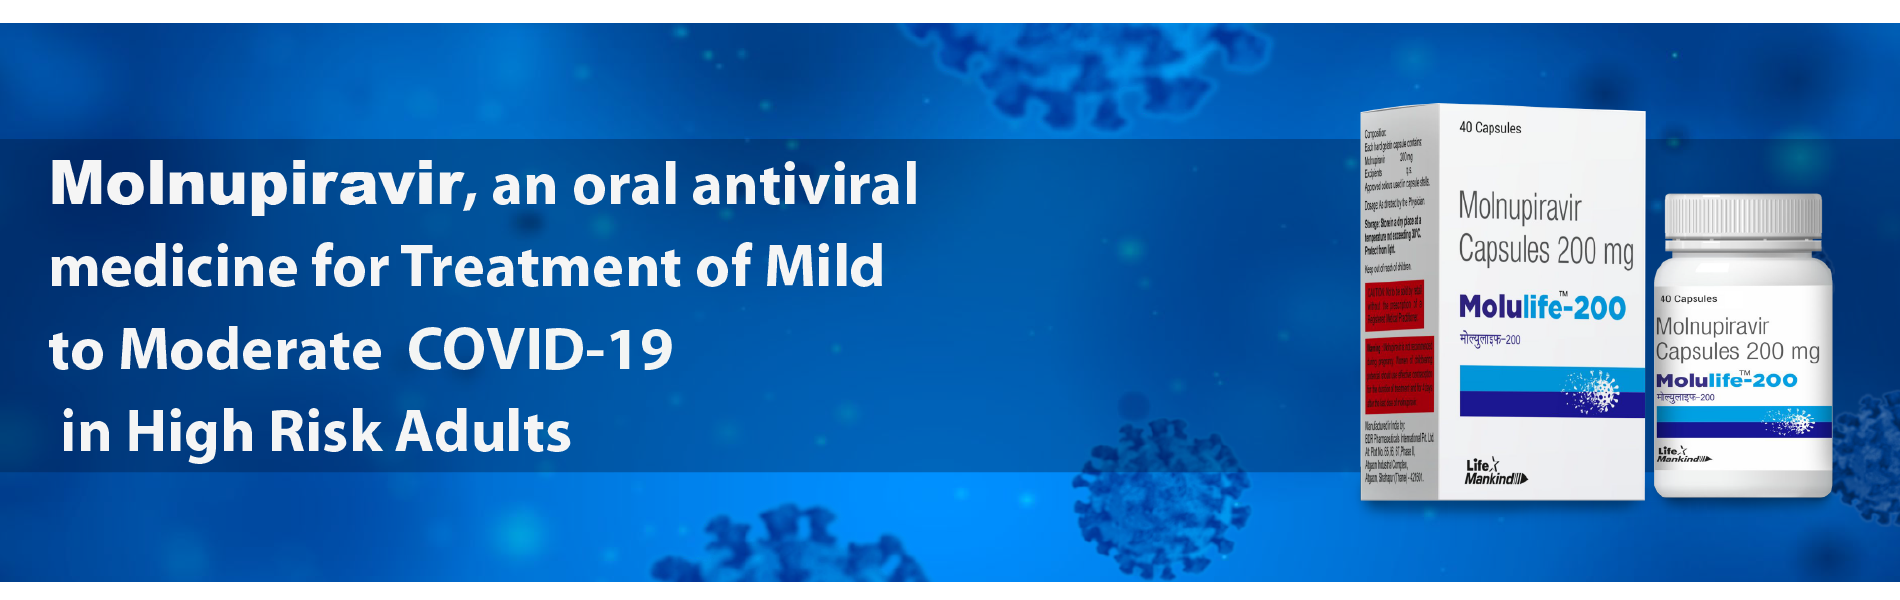 Molnupiravir- Oral Antiviral medicine for Covid Treatment